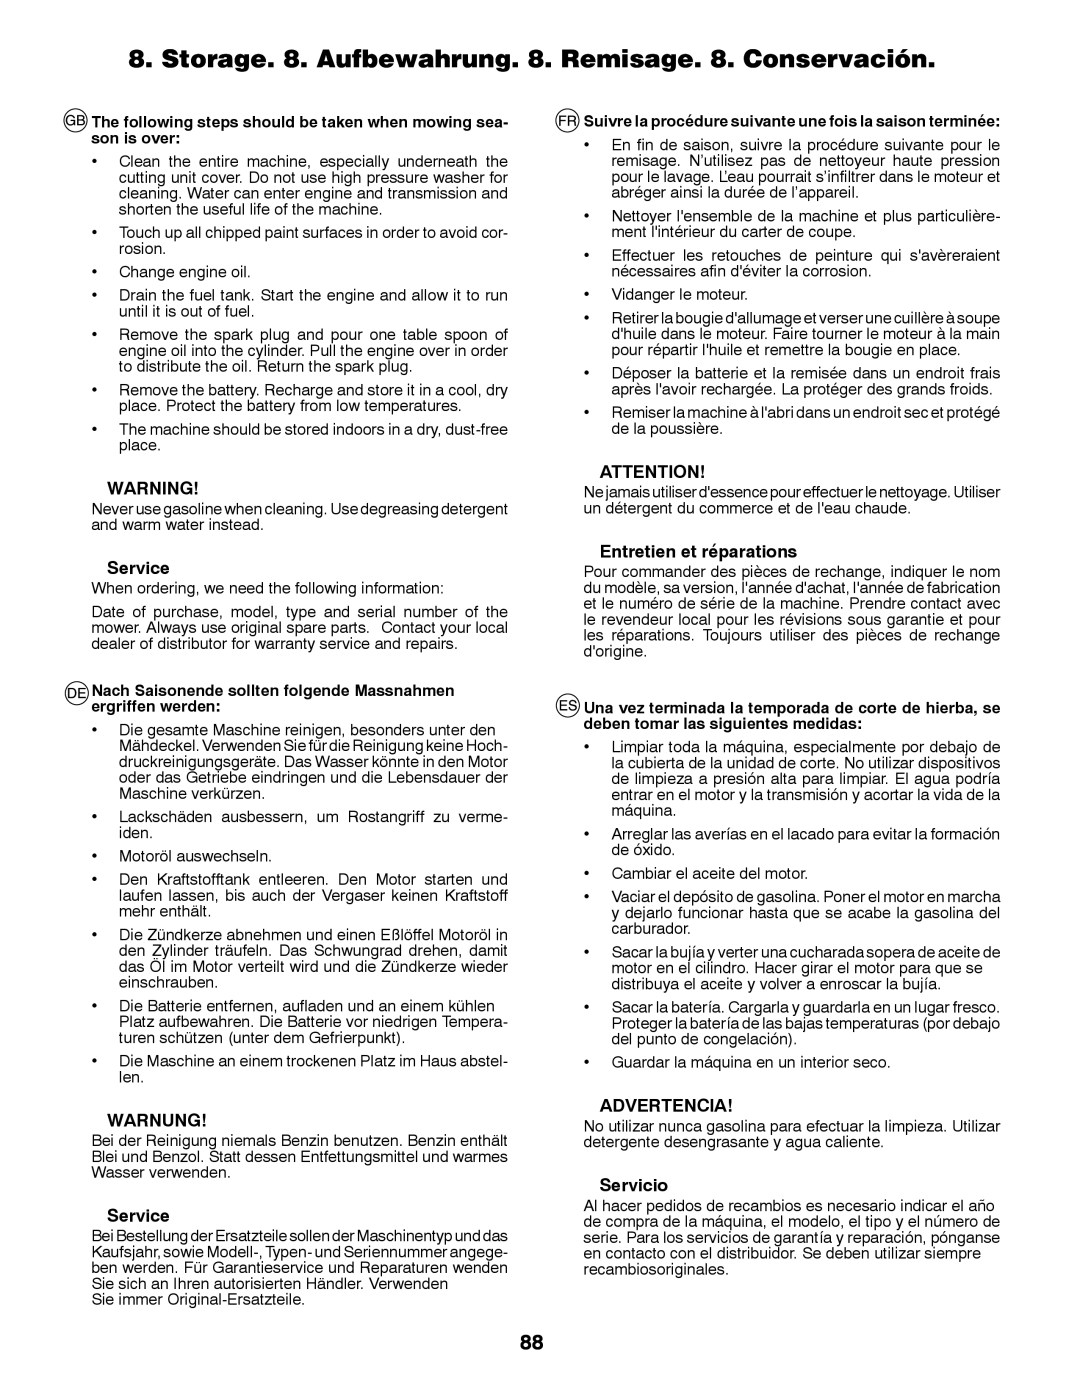 Jonsered LT2213C instruction manual Service, Entretien et réparations, Warnung, Advertencia, Servicio 